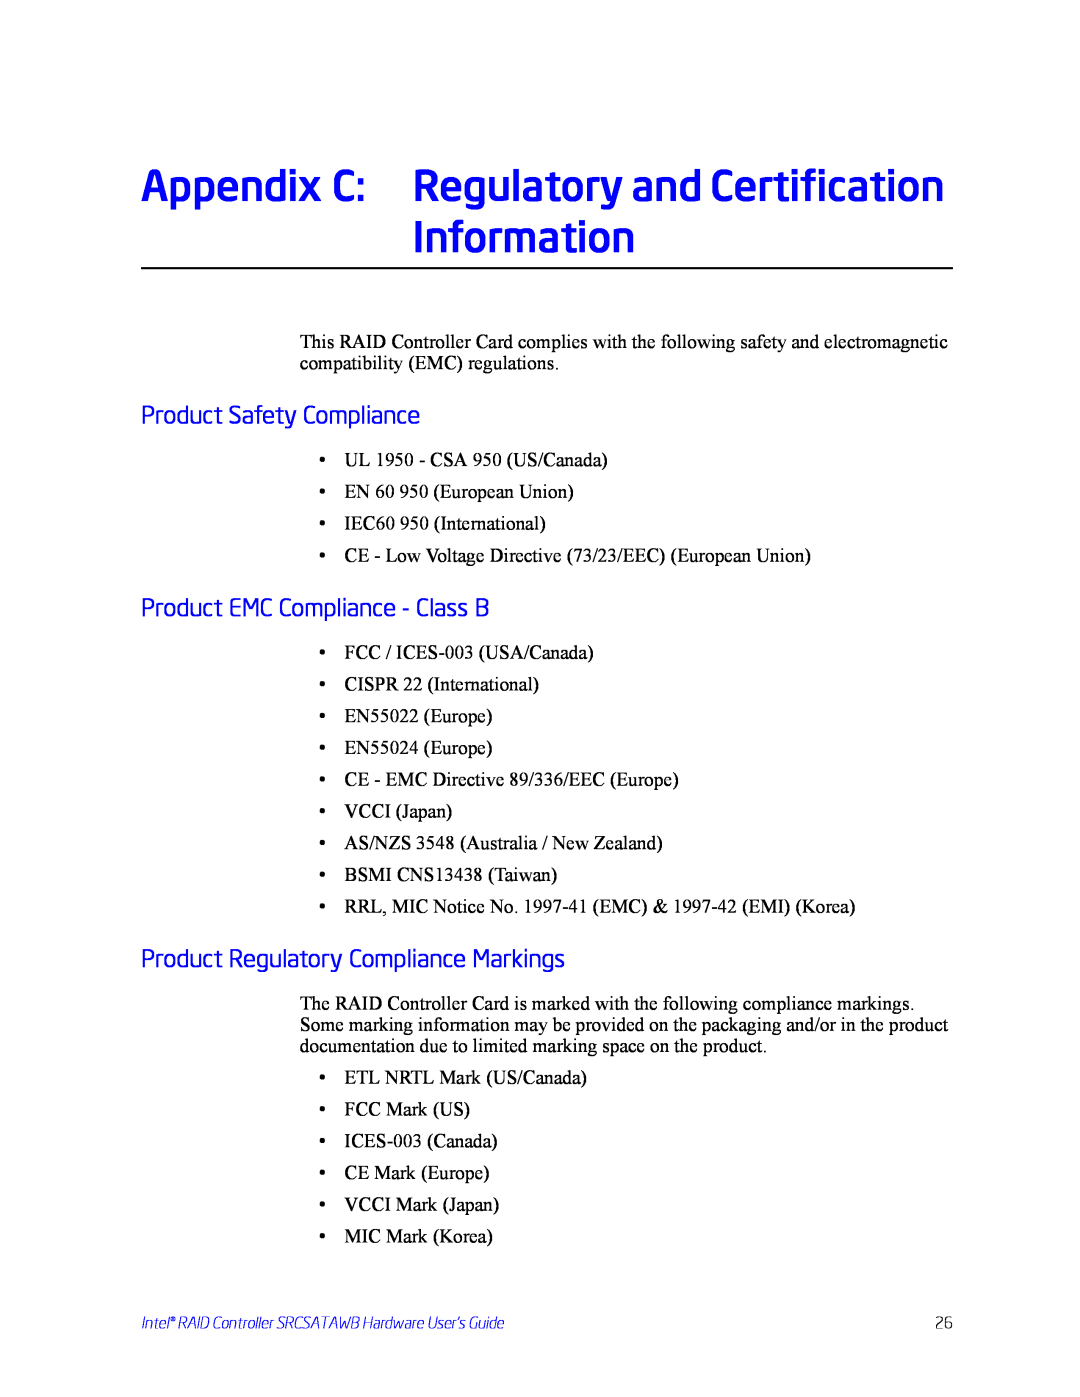 Intel SRCSATAWB manual Appendix C: Regulatory and Certification, Information, Product Safety Compliance 